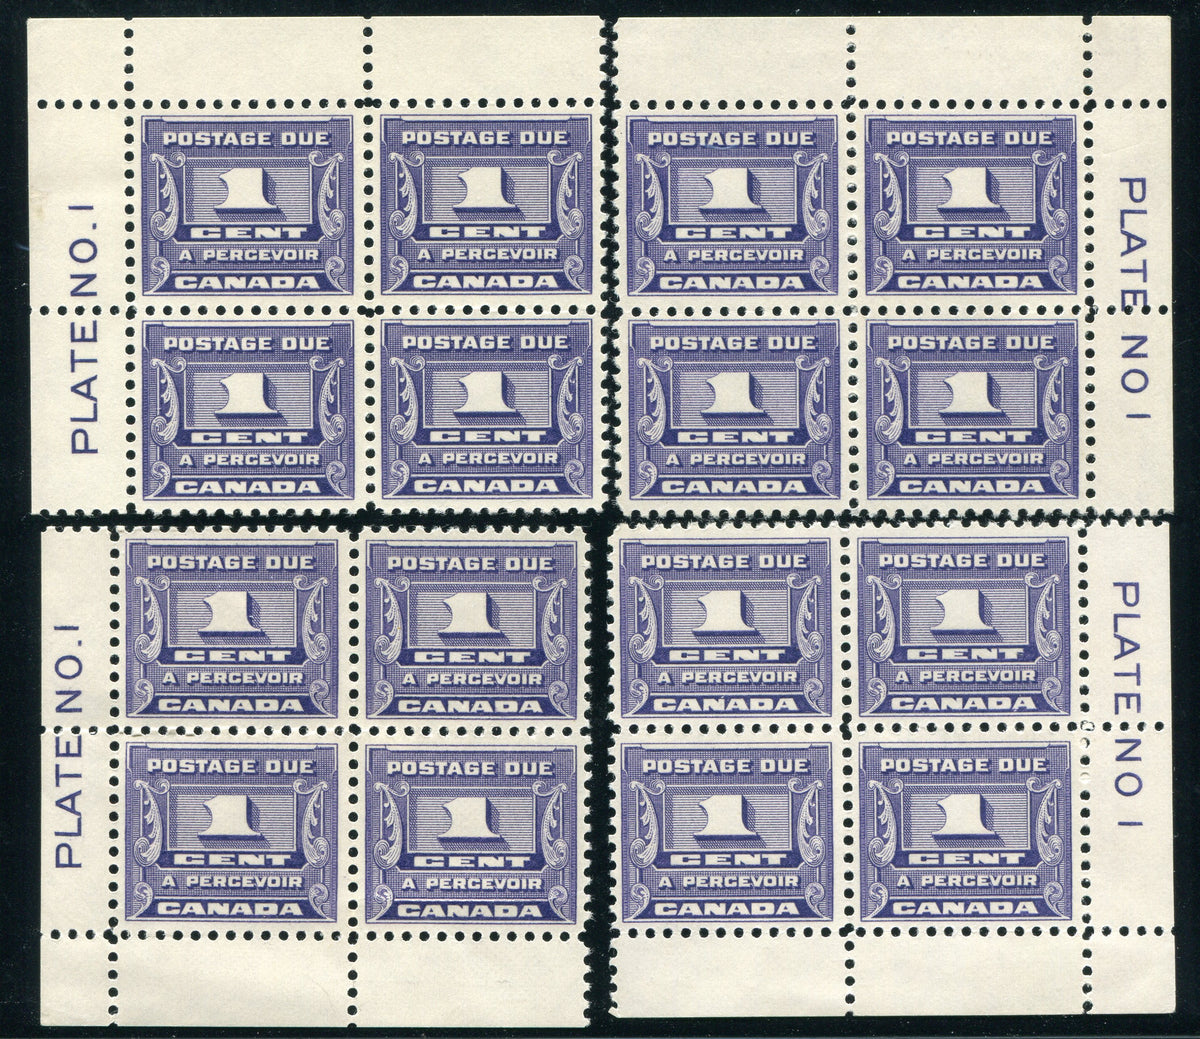 0127CA1708 - Canada J11 - Mint Plate Block Matched Set